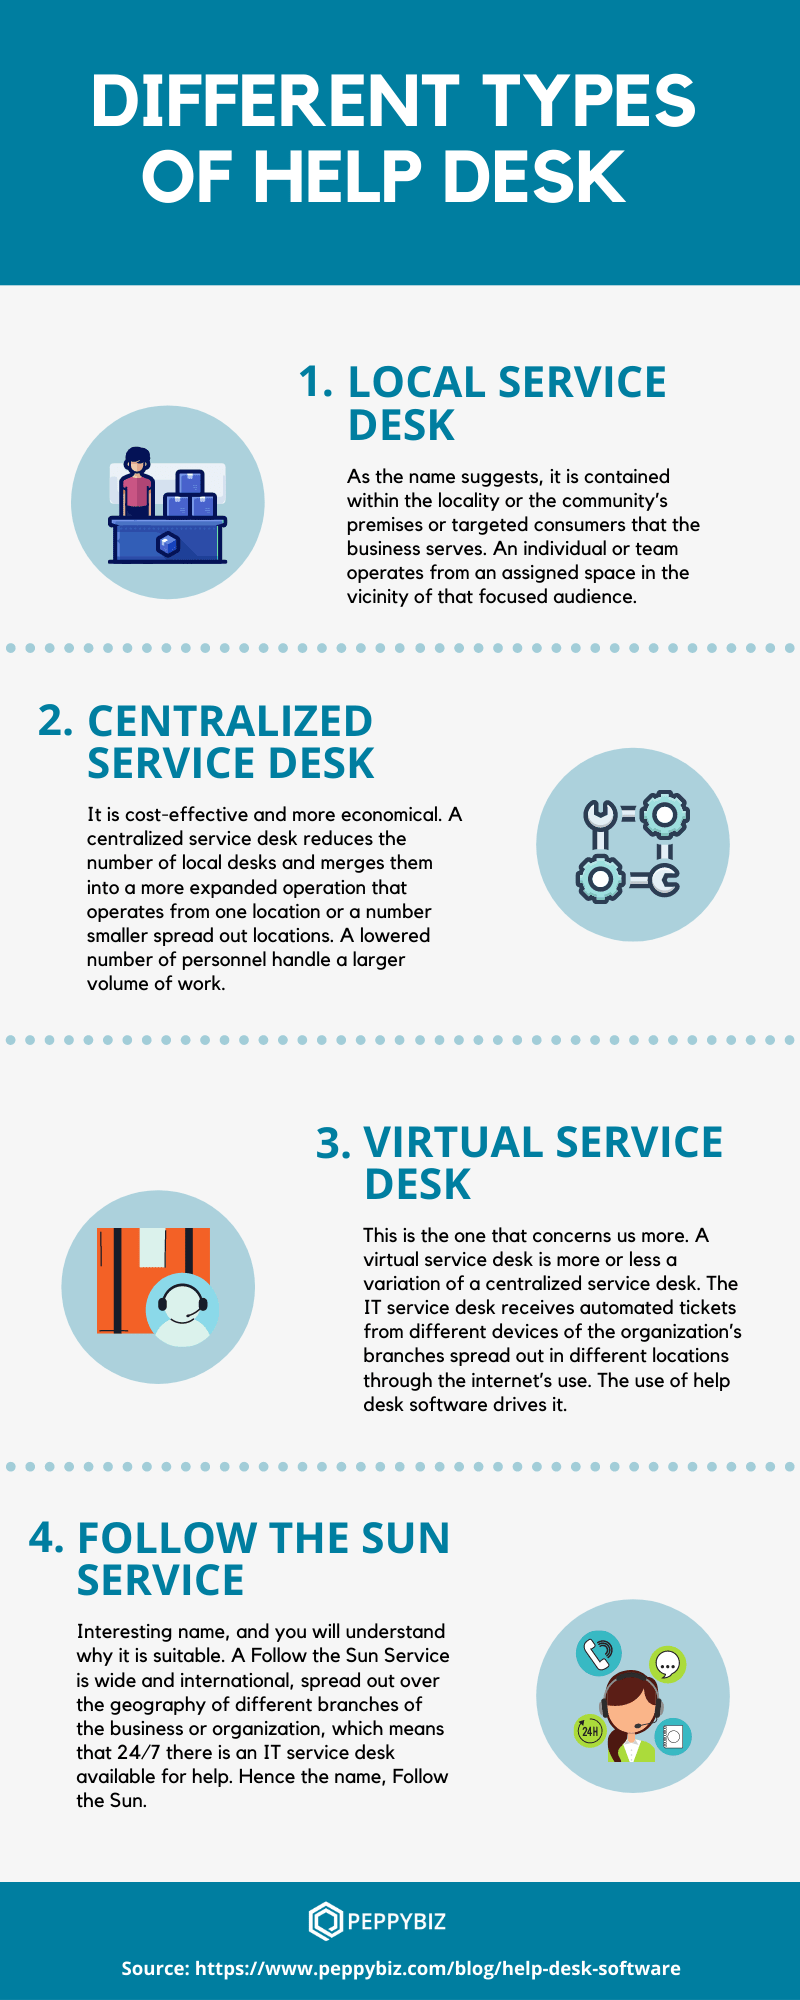 Types of Help Desk